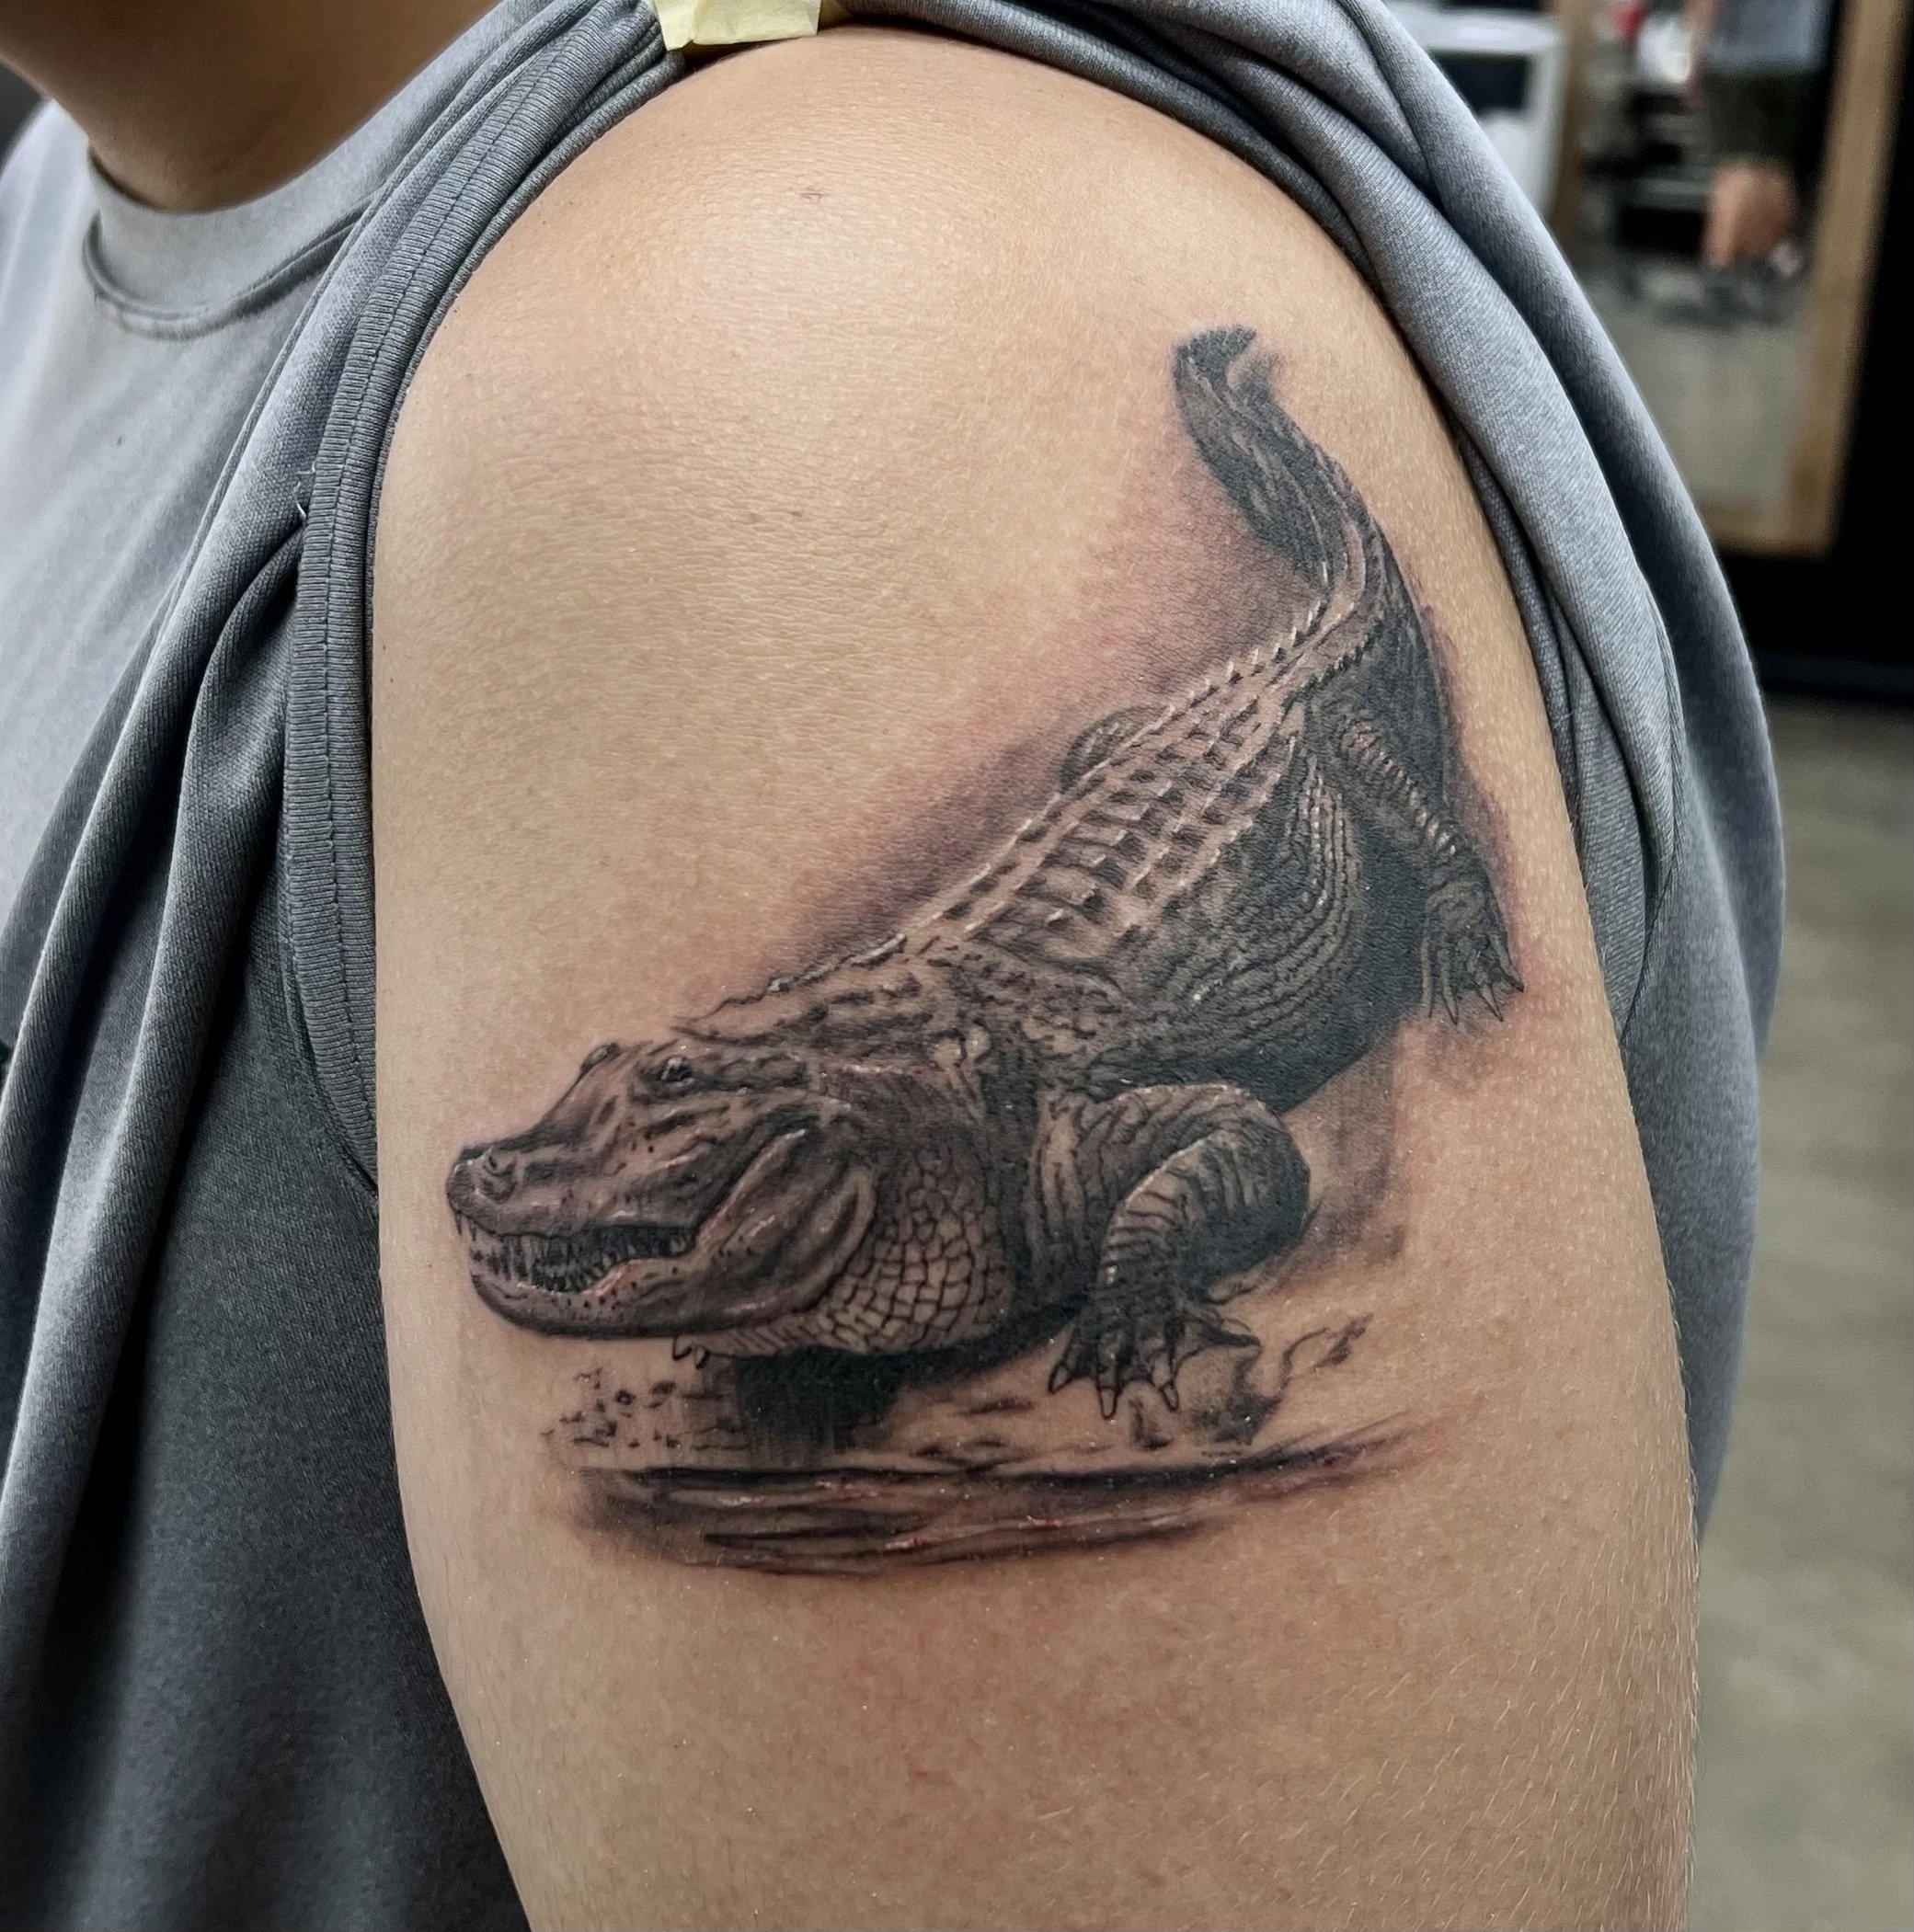 David Hale Tattoo | Crocodile | Alligator tattoo, David hale tattoo, Crocodile  tattoo